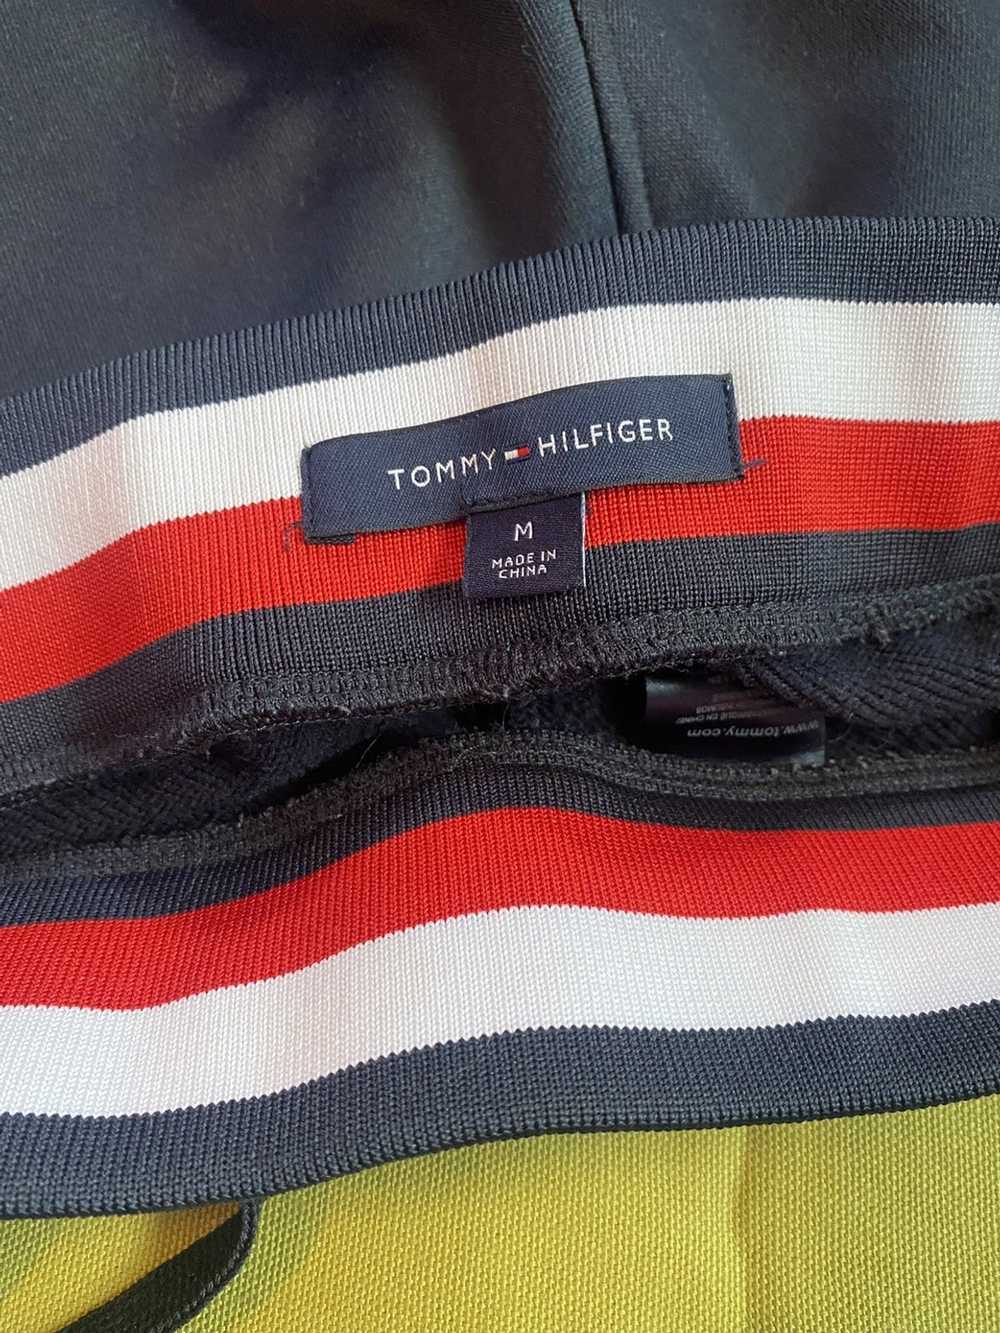 Tommy Hilfiger Tommy Hilfiger Shorts (Size M) - image 3